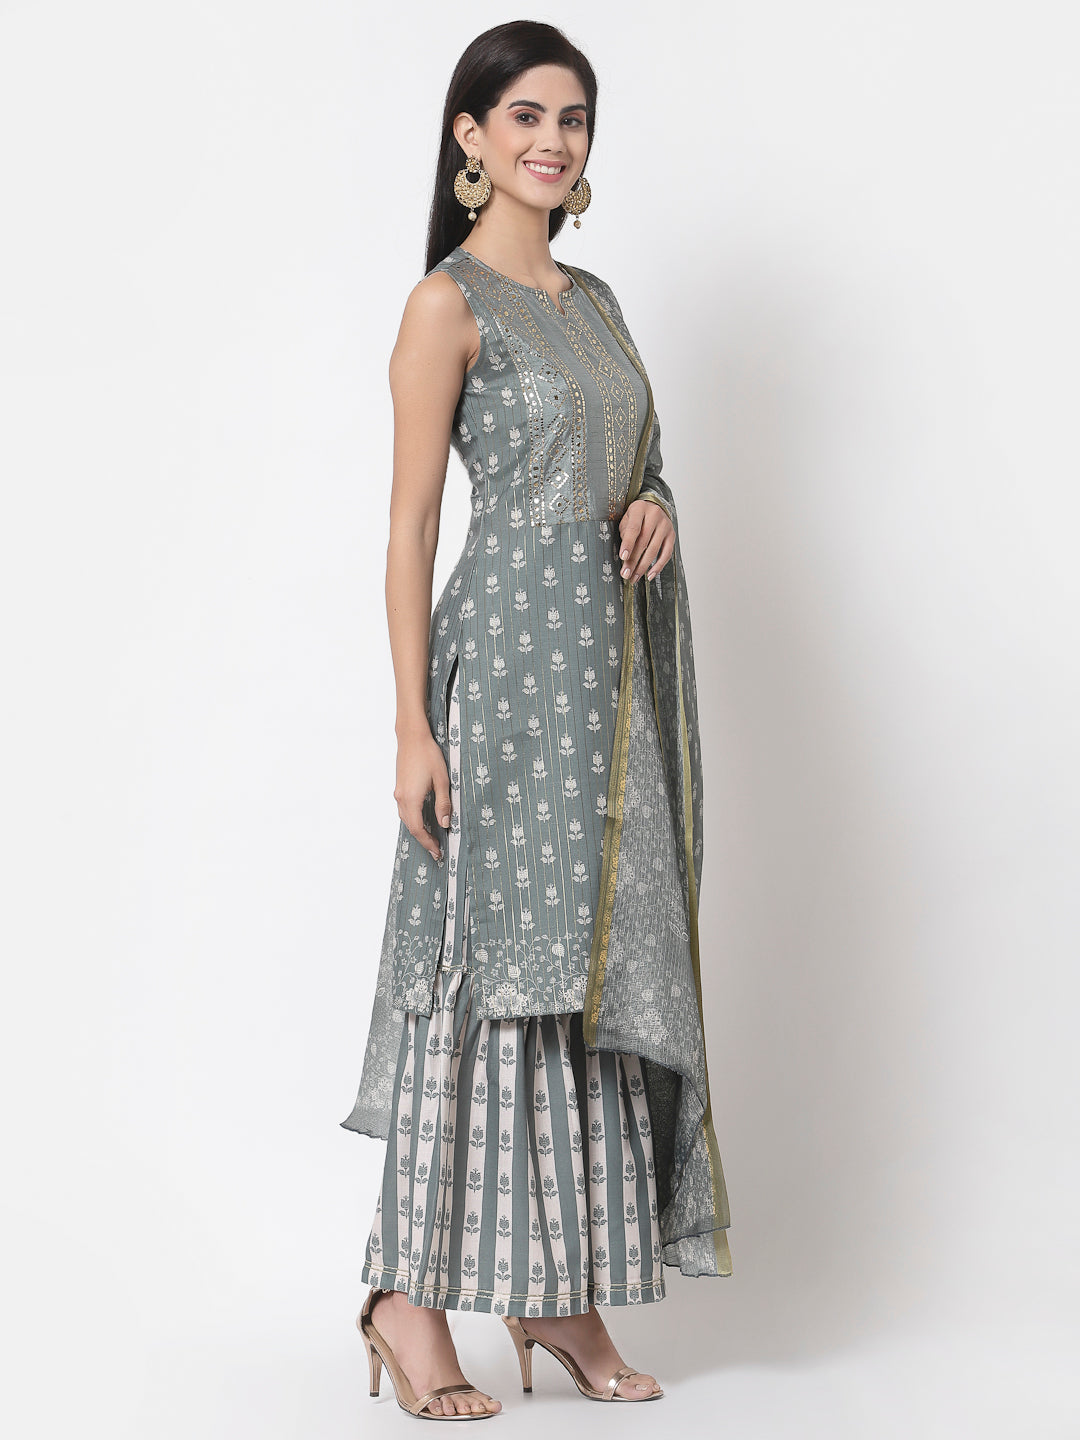 Women's Grey cotton blend Printed Sleeveless Round Neck Kurta with Sharara & Dupatta (3Pieces) set - Myshka